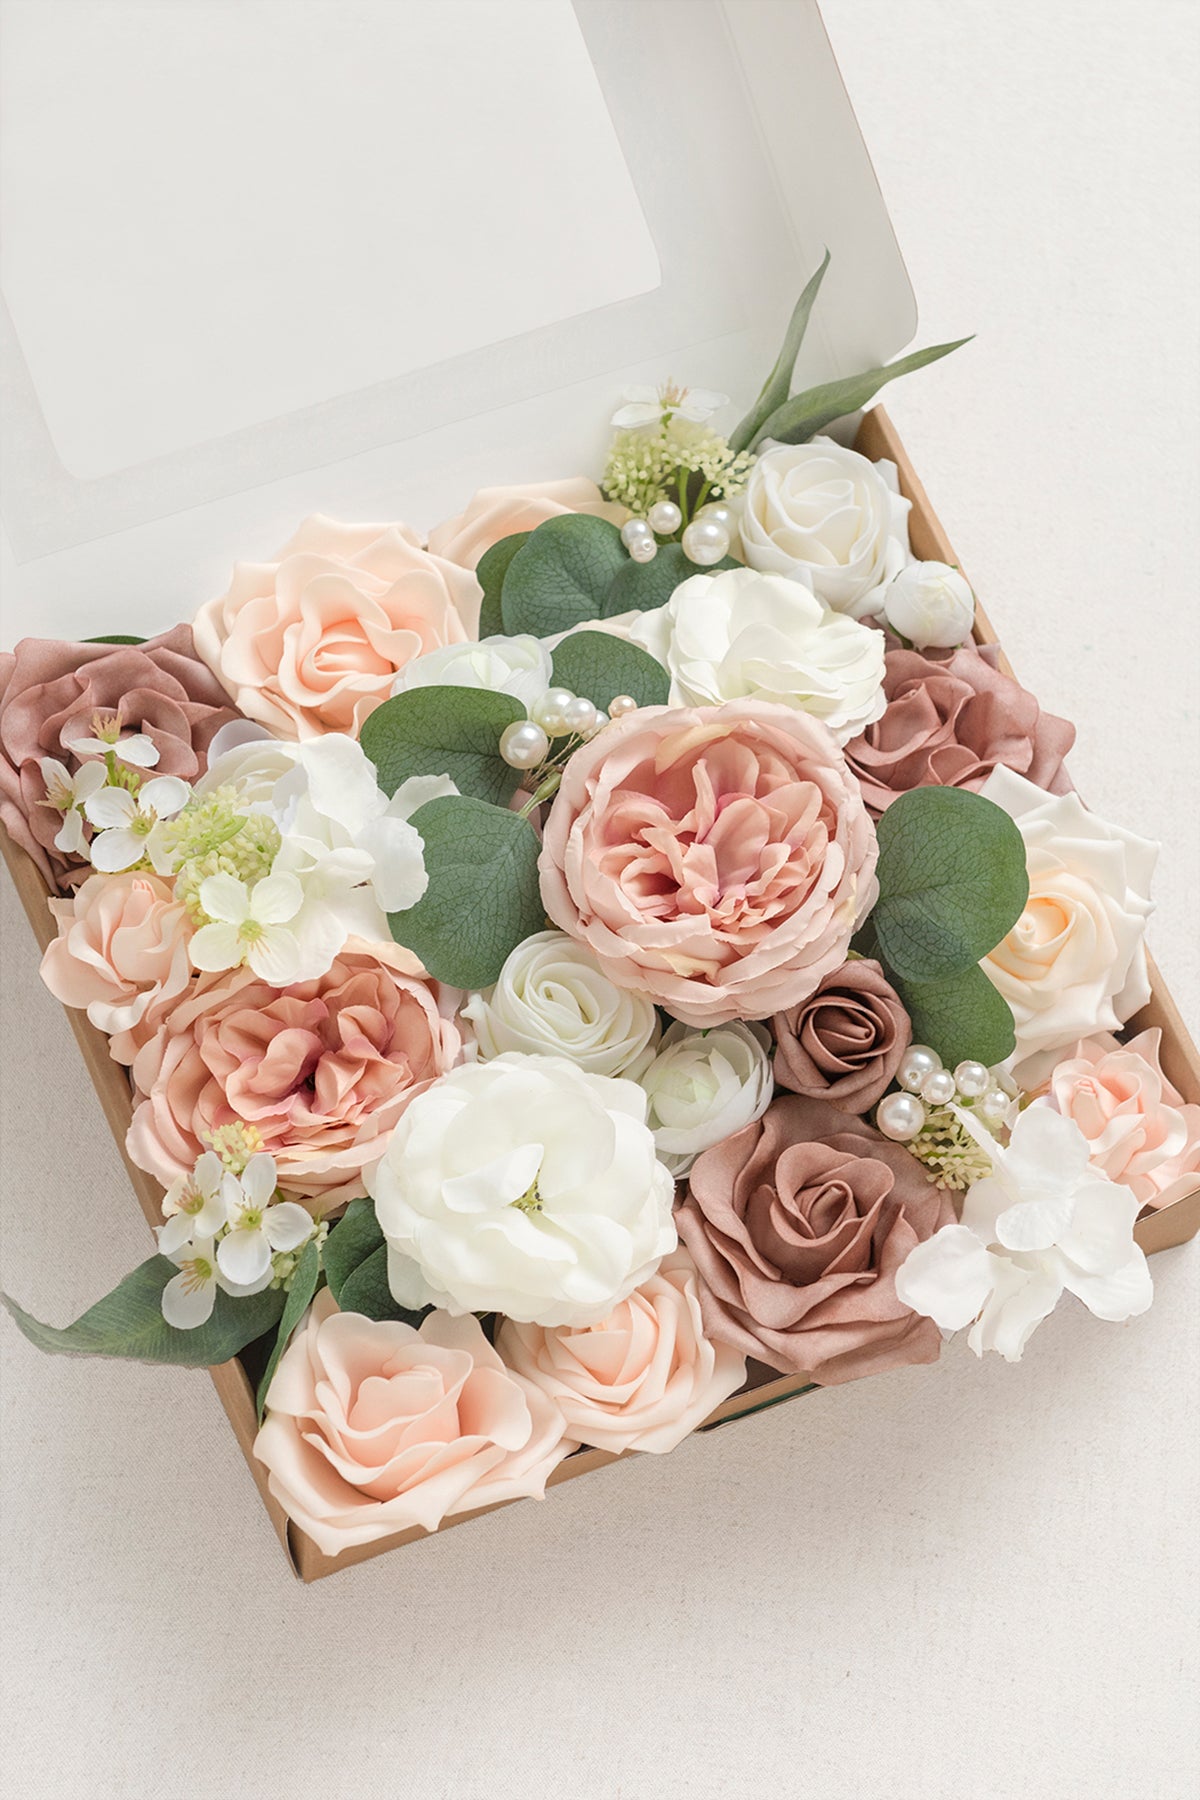 DIY Designer Flower Boxes in Dusty Rose & Cream